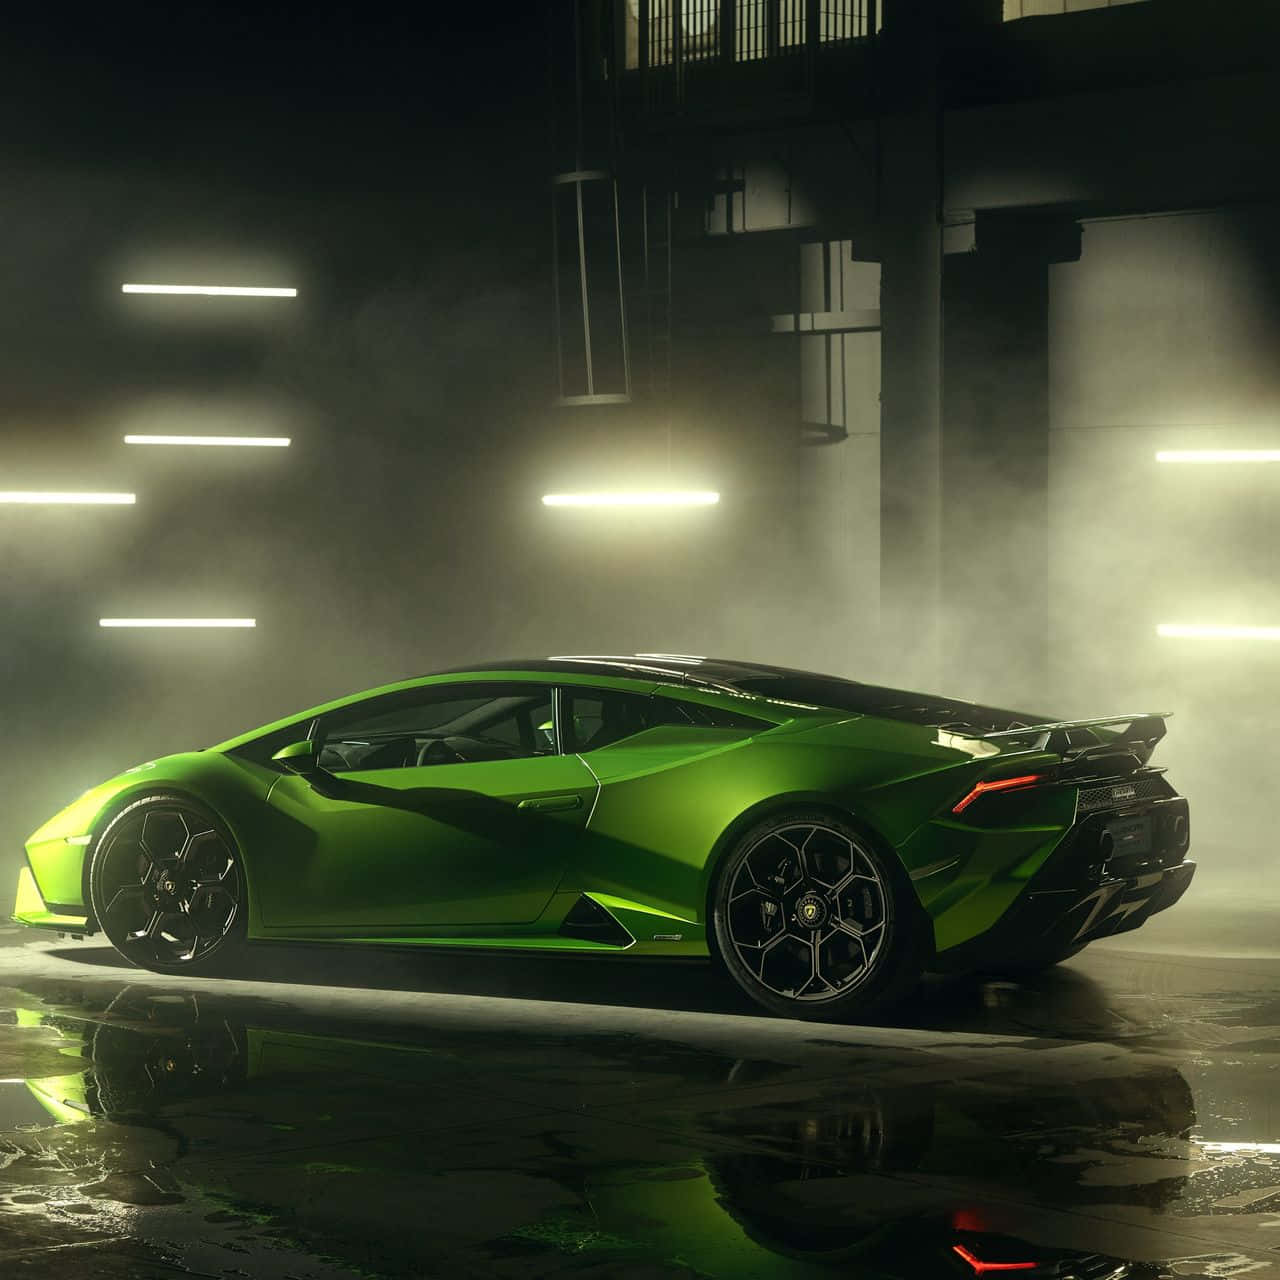 En grøn Lamborghini Huracan parkeret i en mørk garage.